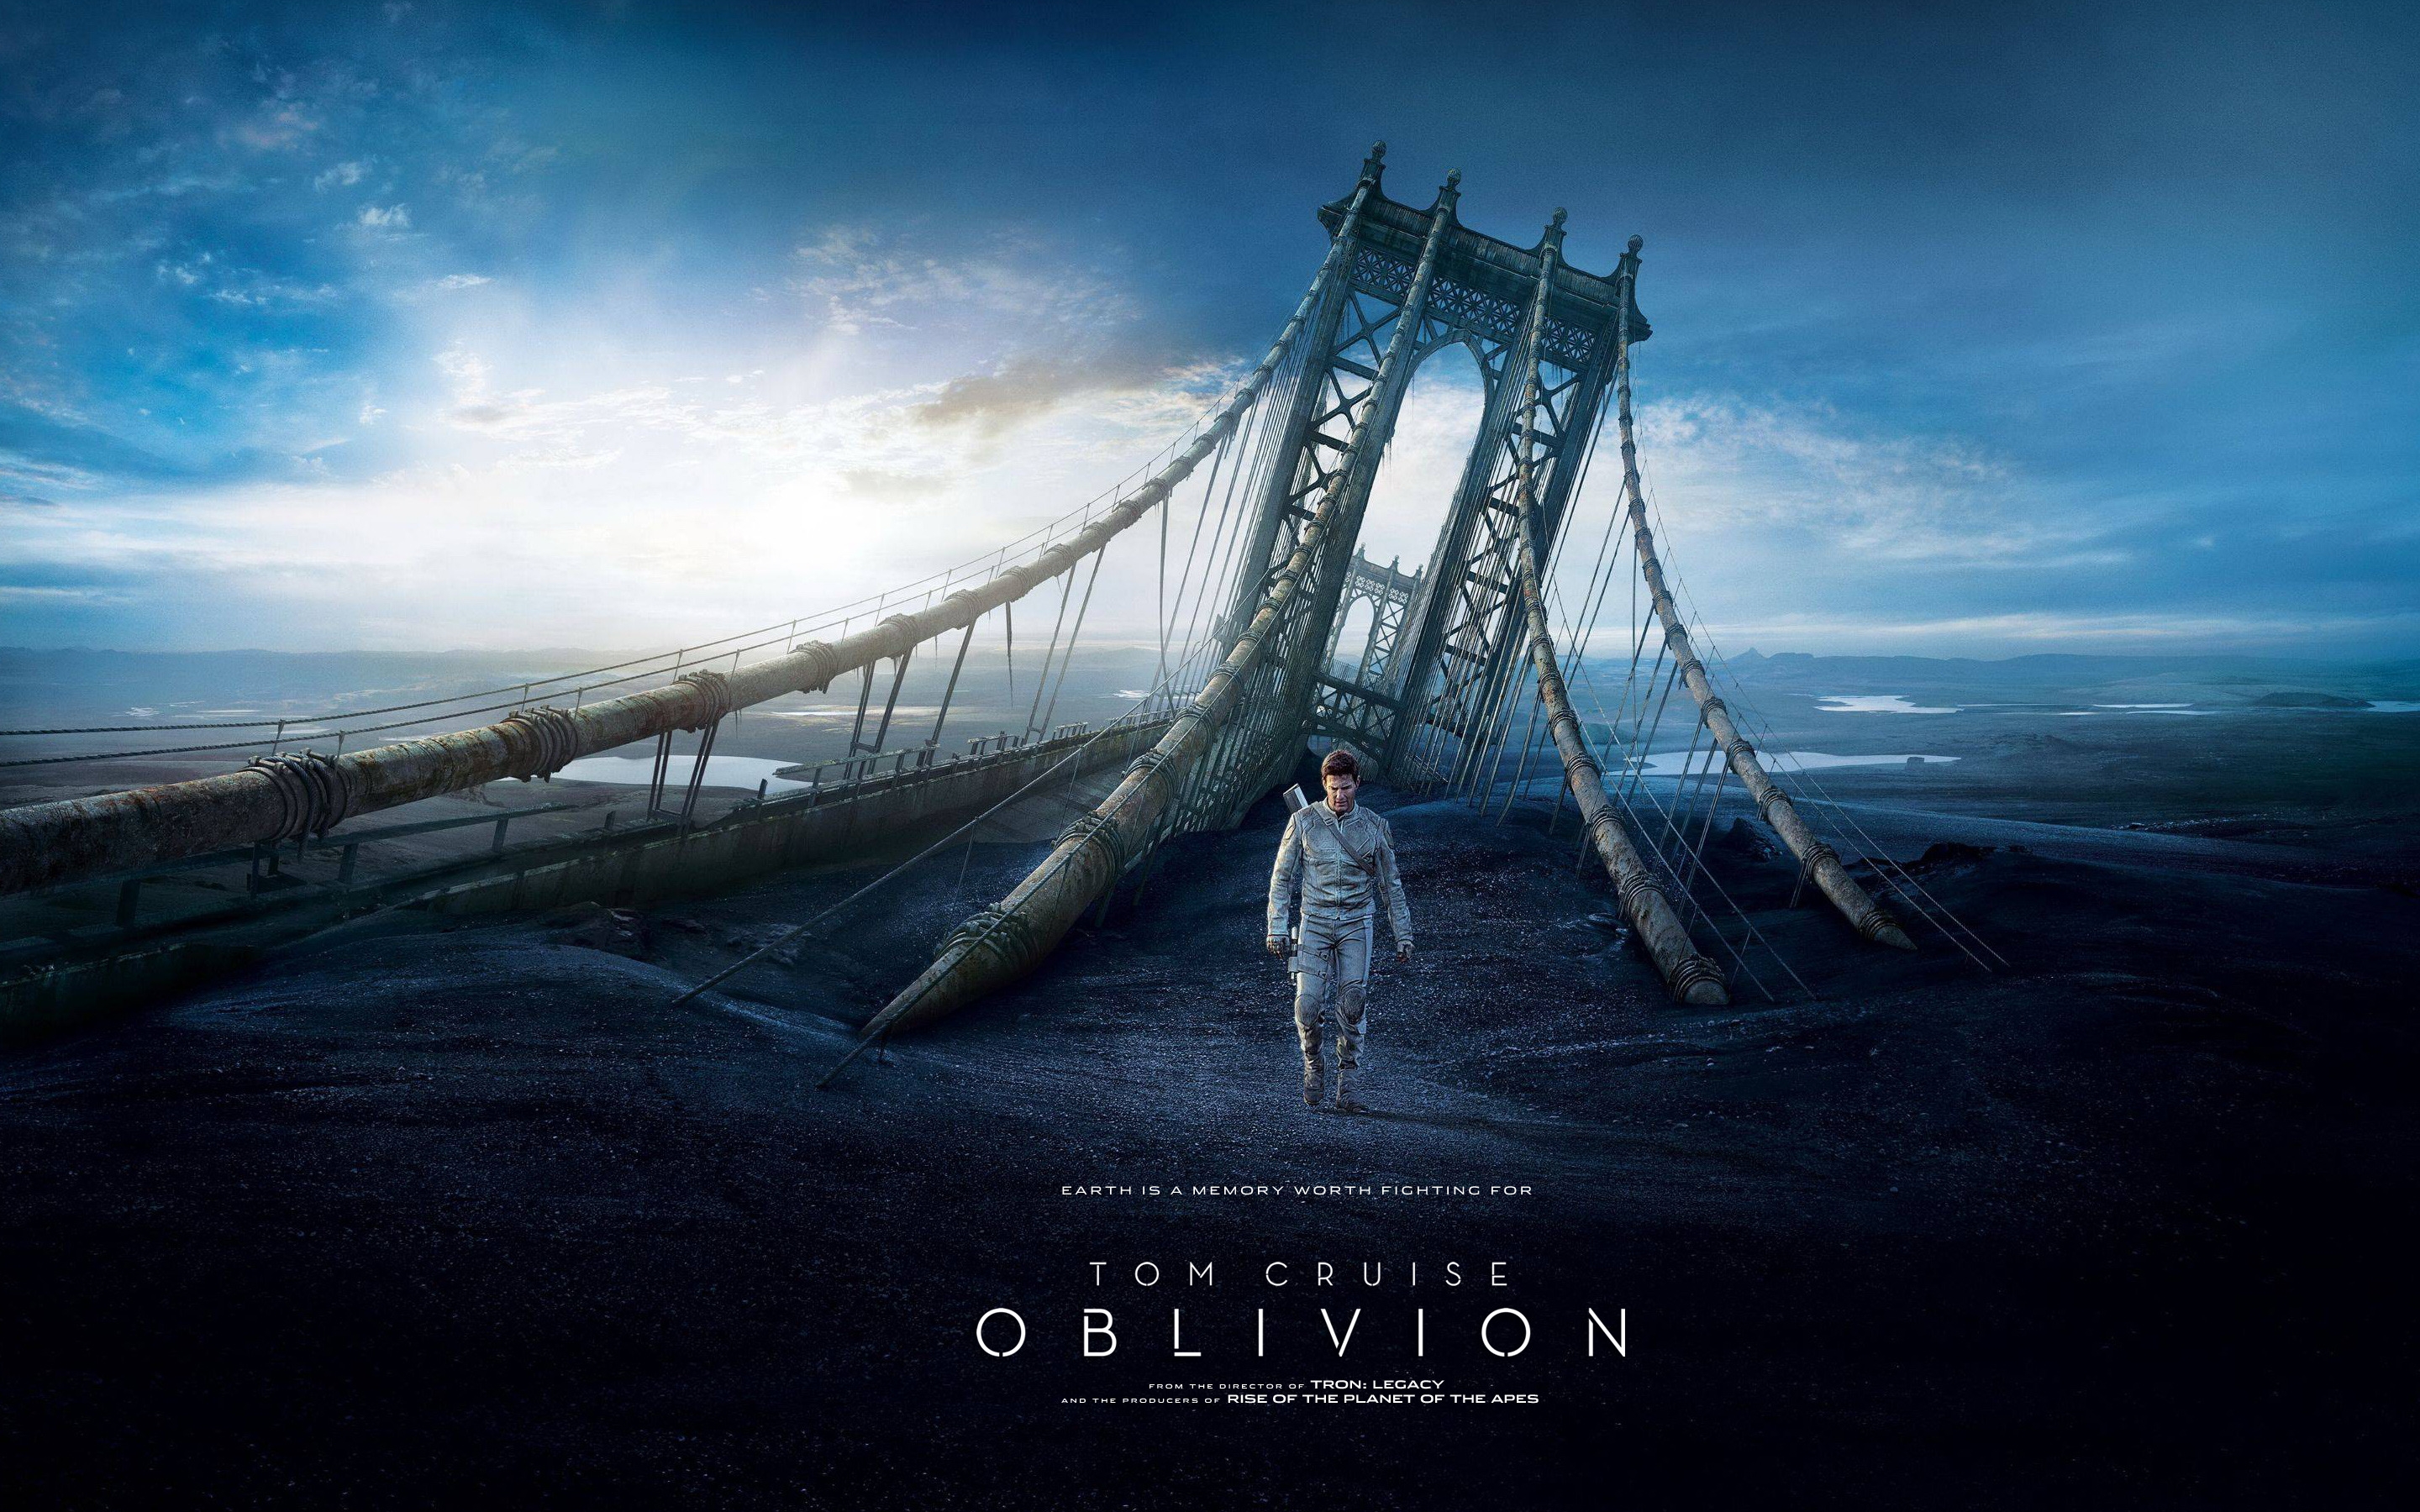 Oblivion Tom Cruise for 2880 x 1800 Retina Display resolution